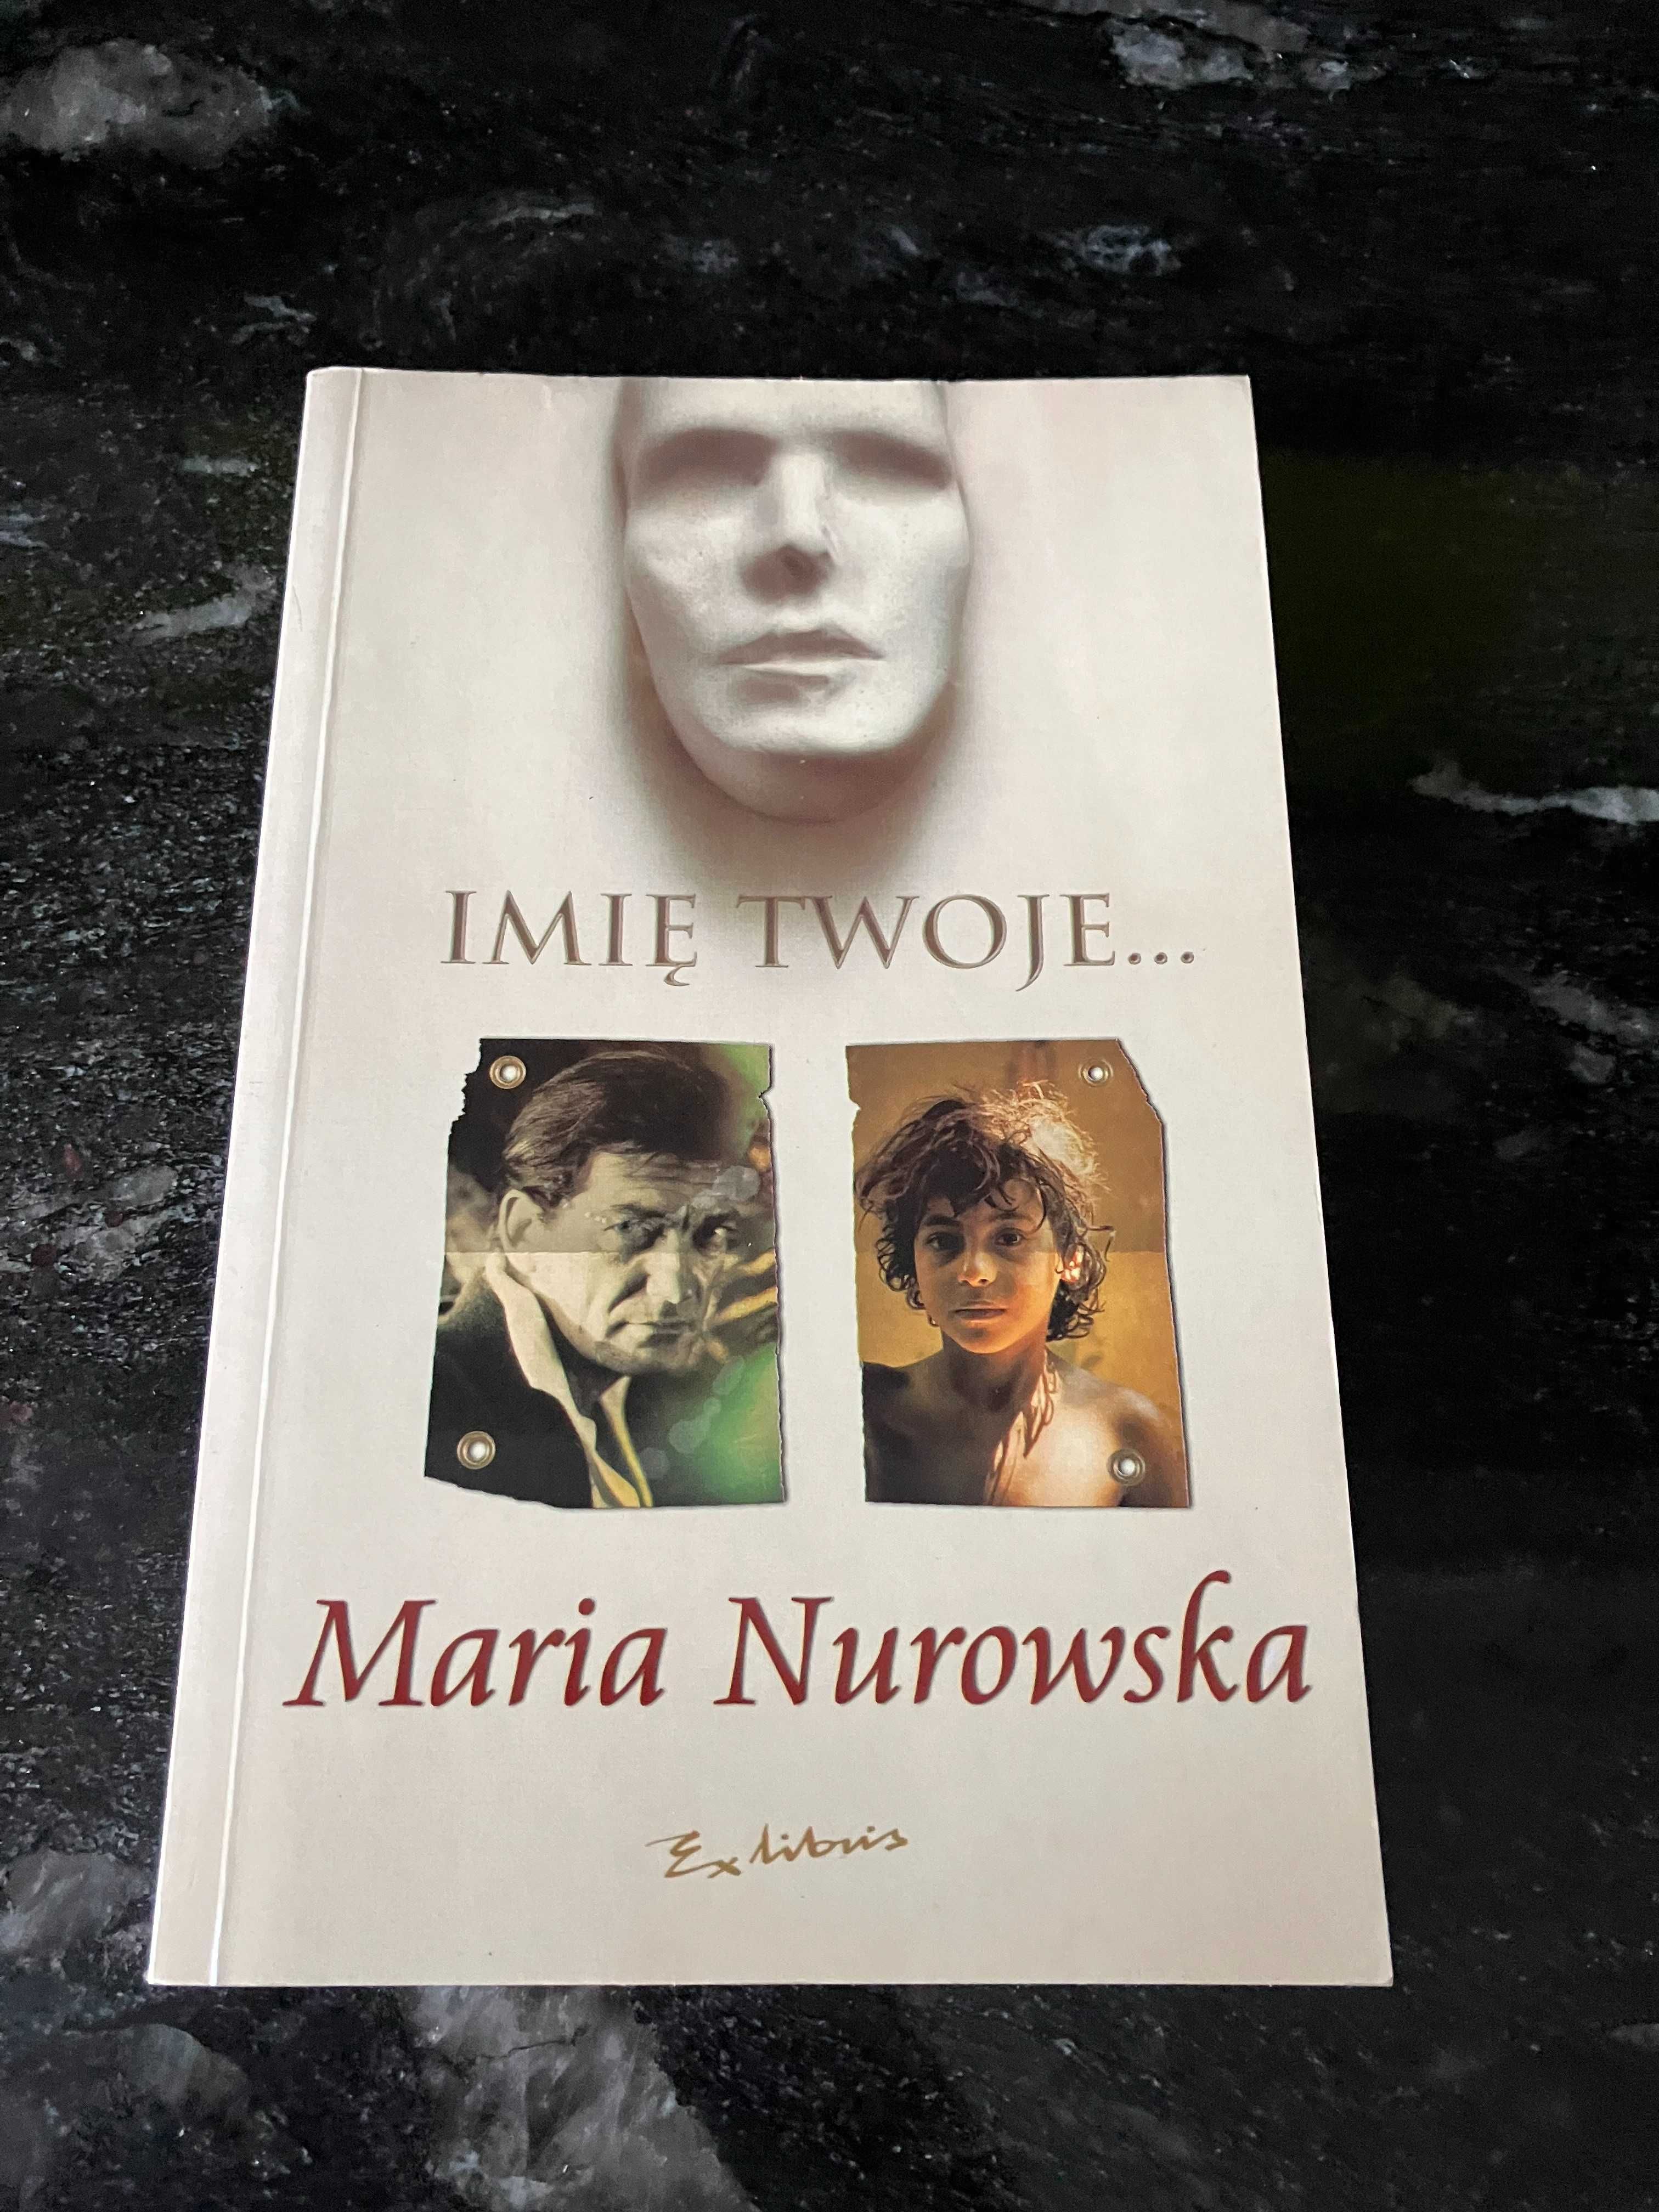 Imię twoje - Maria Nurowska